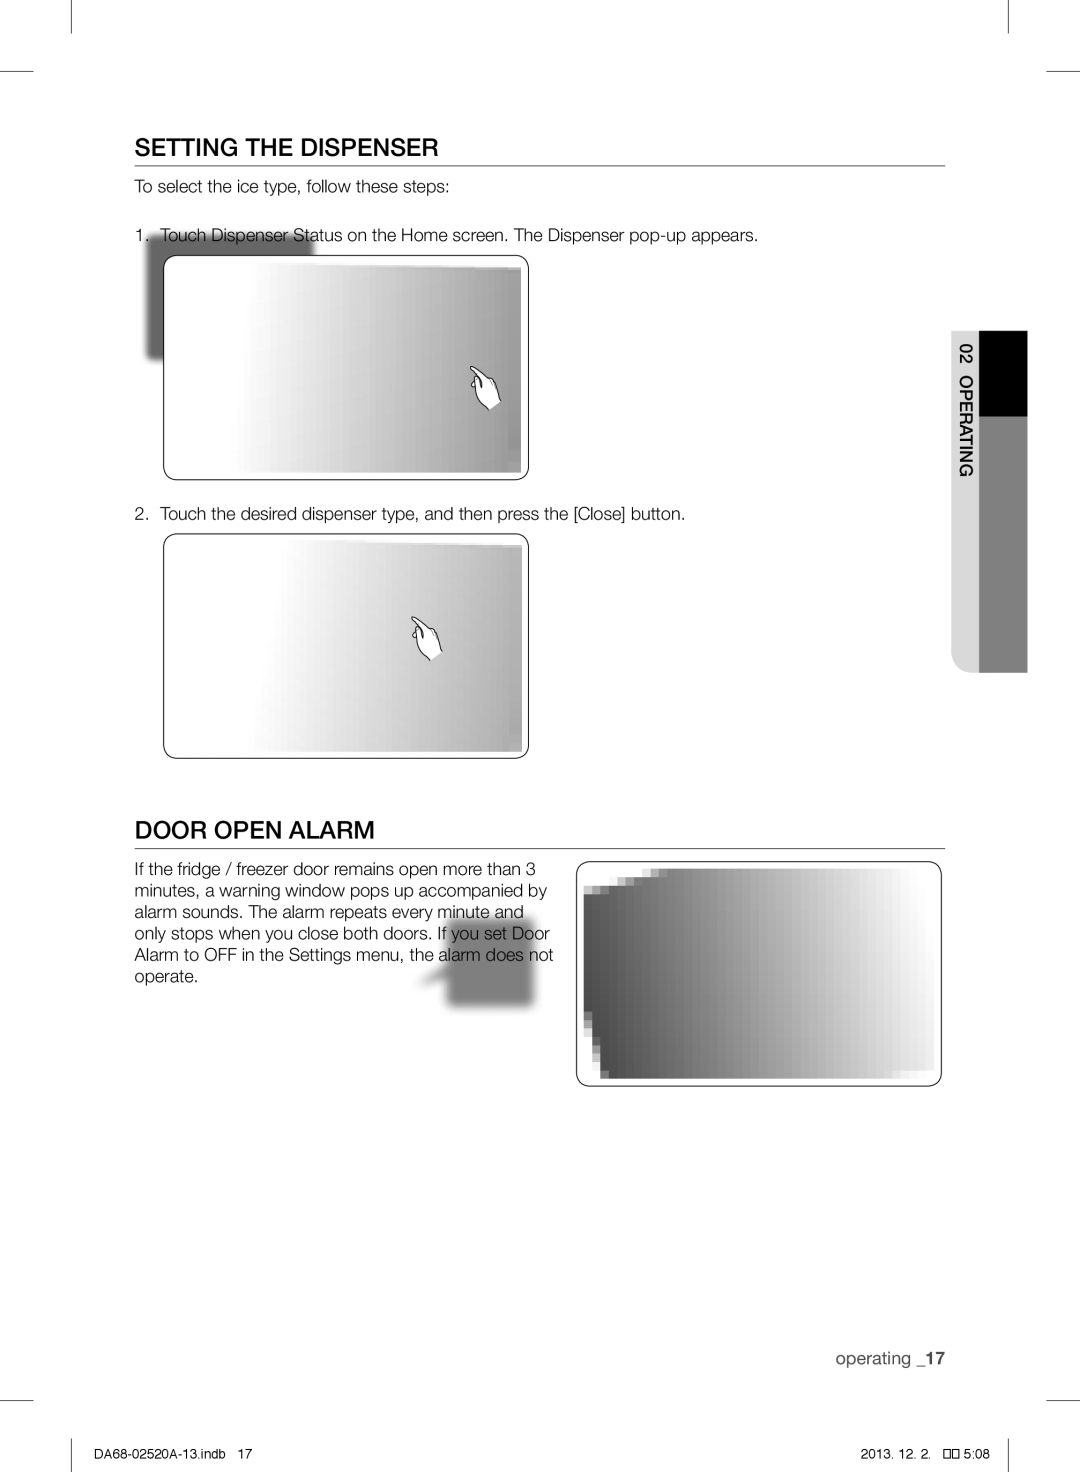 Samsung RF4289HAR user manual Setting the Dispenser, Door Open Alarm 